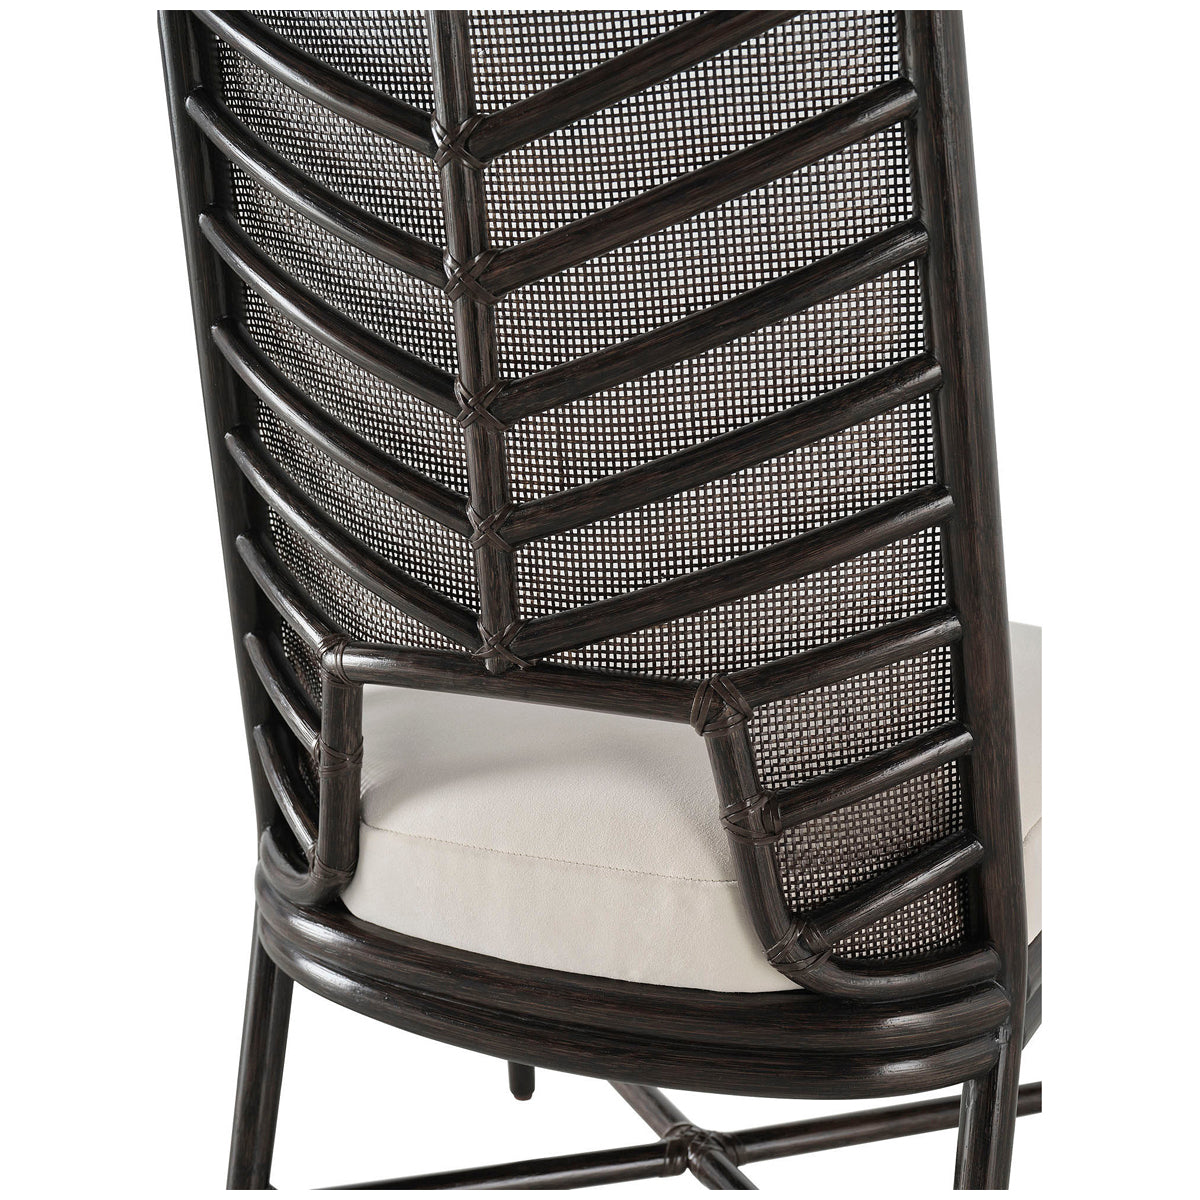 Baker Furniture Reyes Side Chair MCA2344